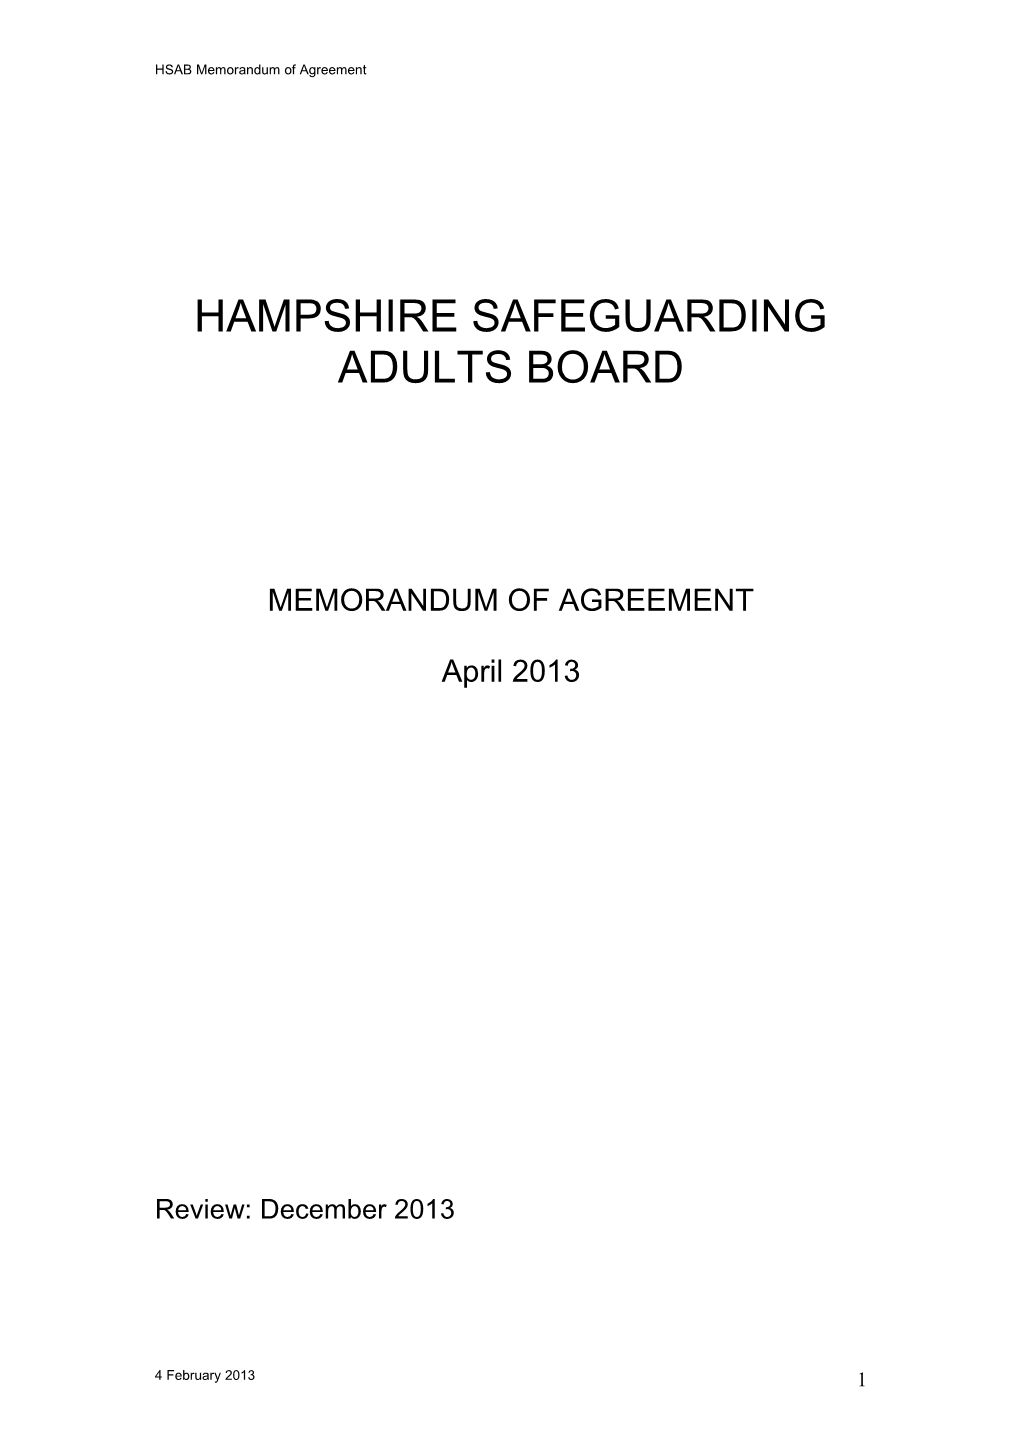 Hampshire Safeguarding Adults Board